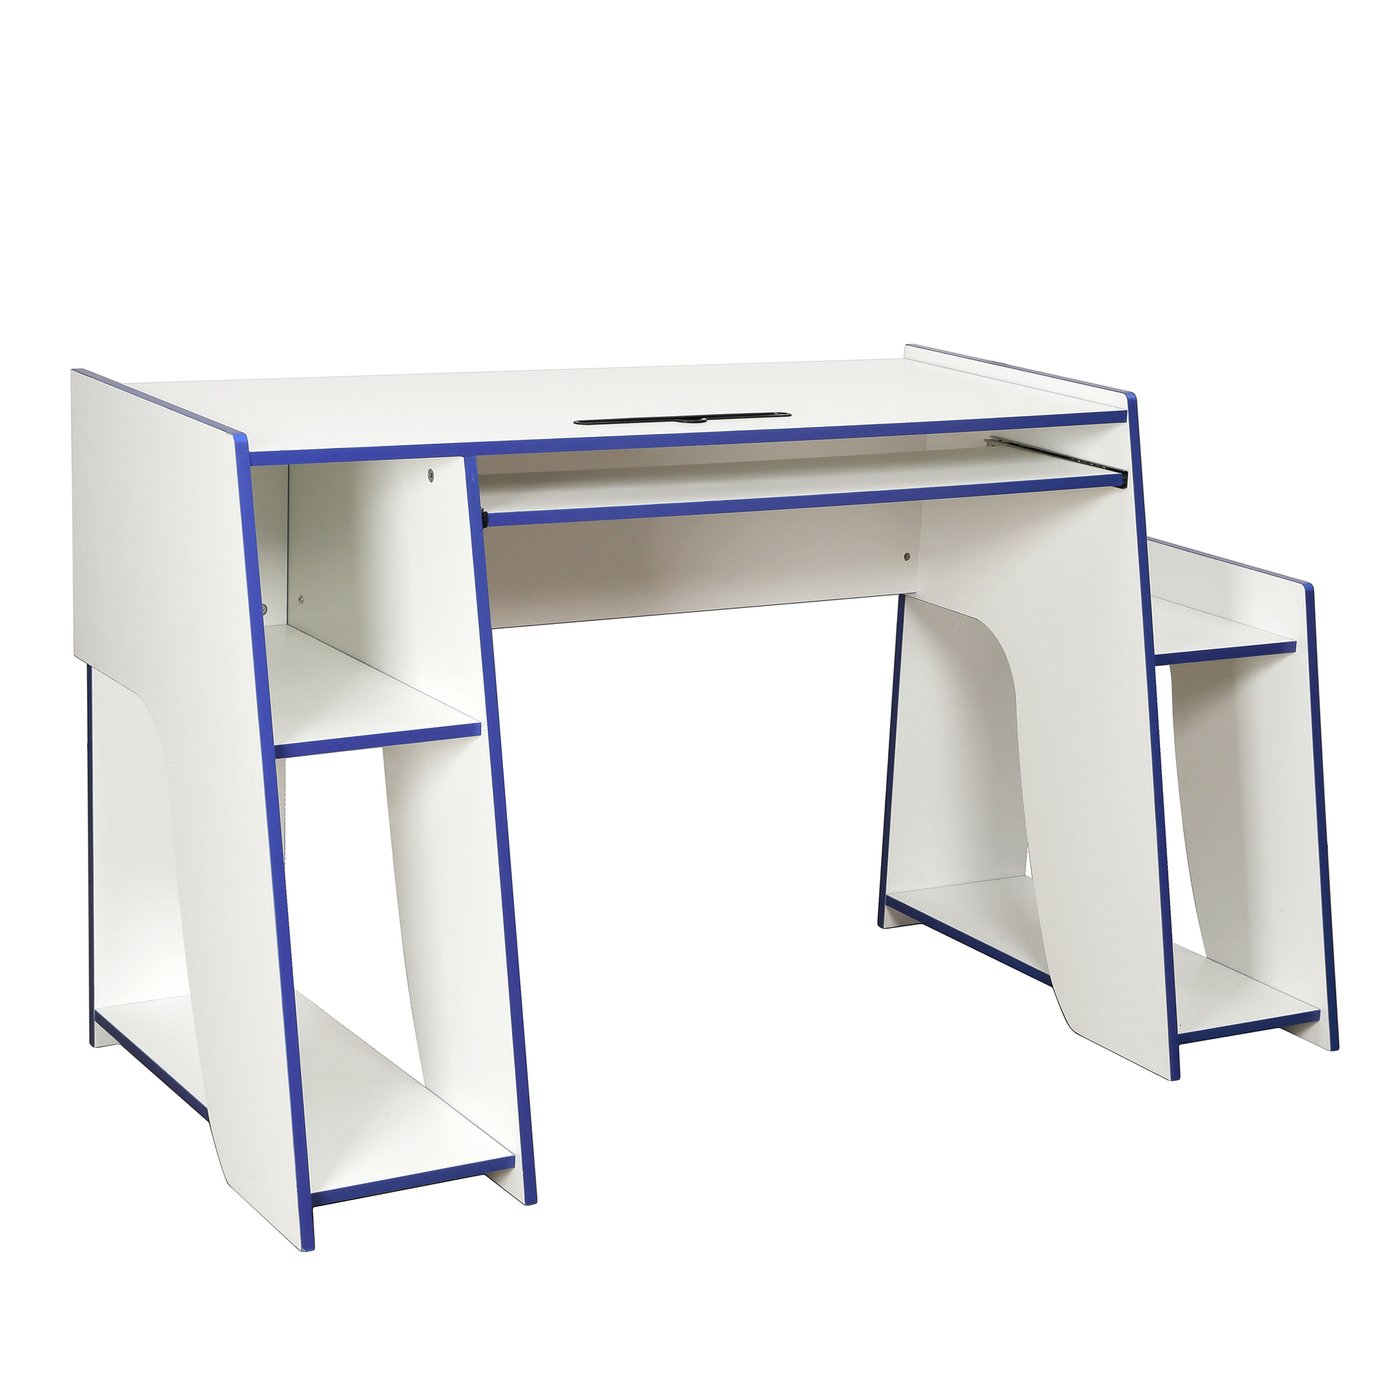 Virtuoso Horizon Gaming Desk - Blue and White